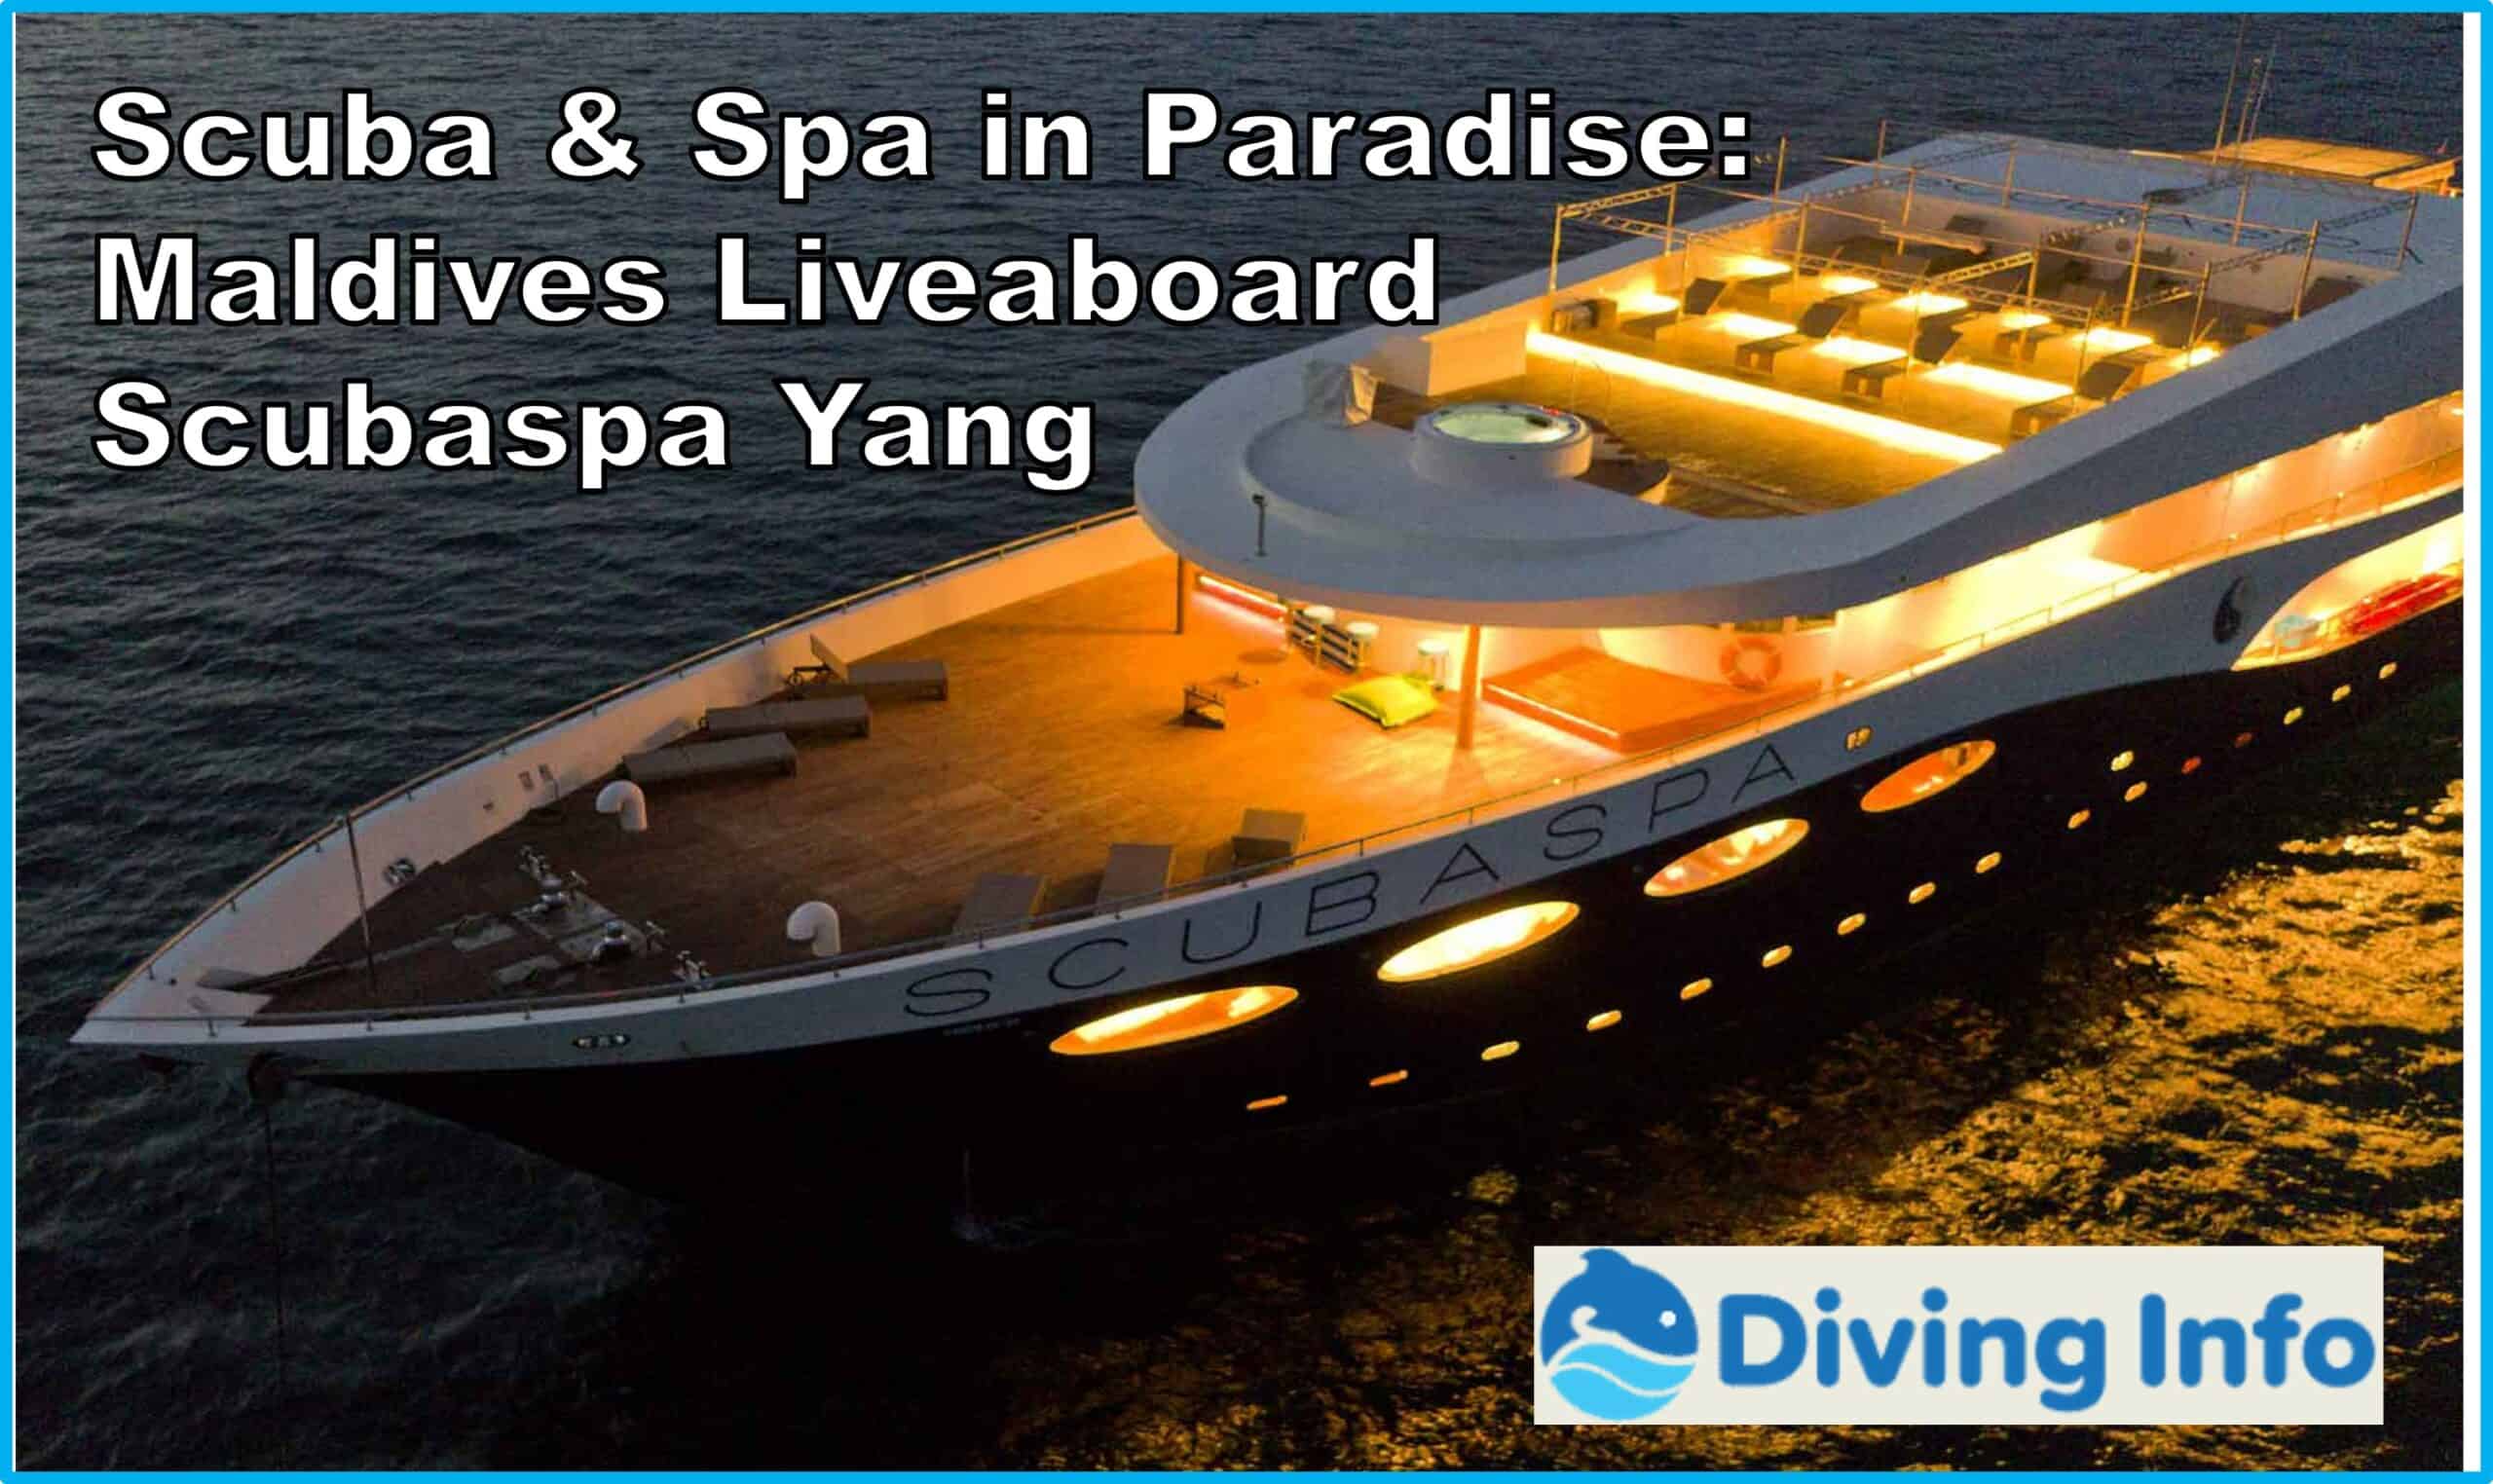 Scuba & Spa in Paradise Maldives Liveaboard Scubaspa Yang